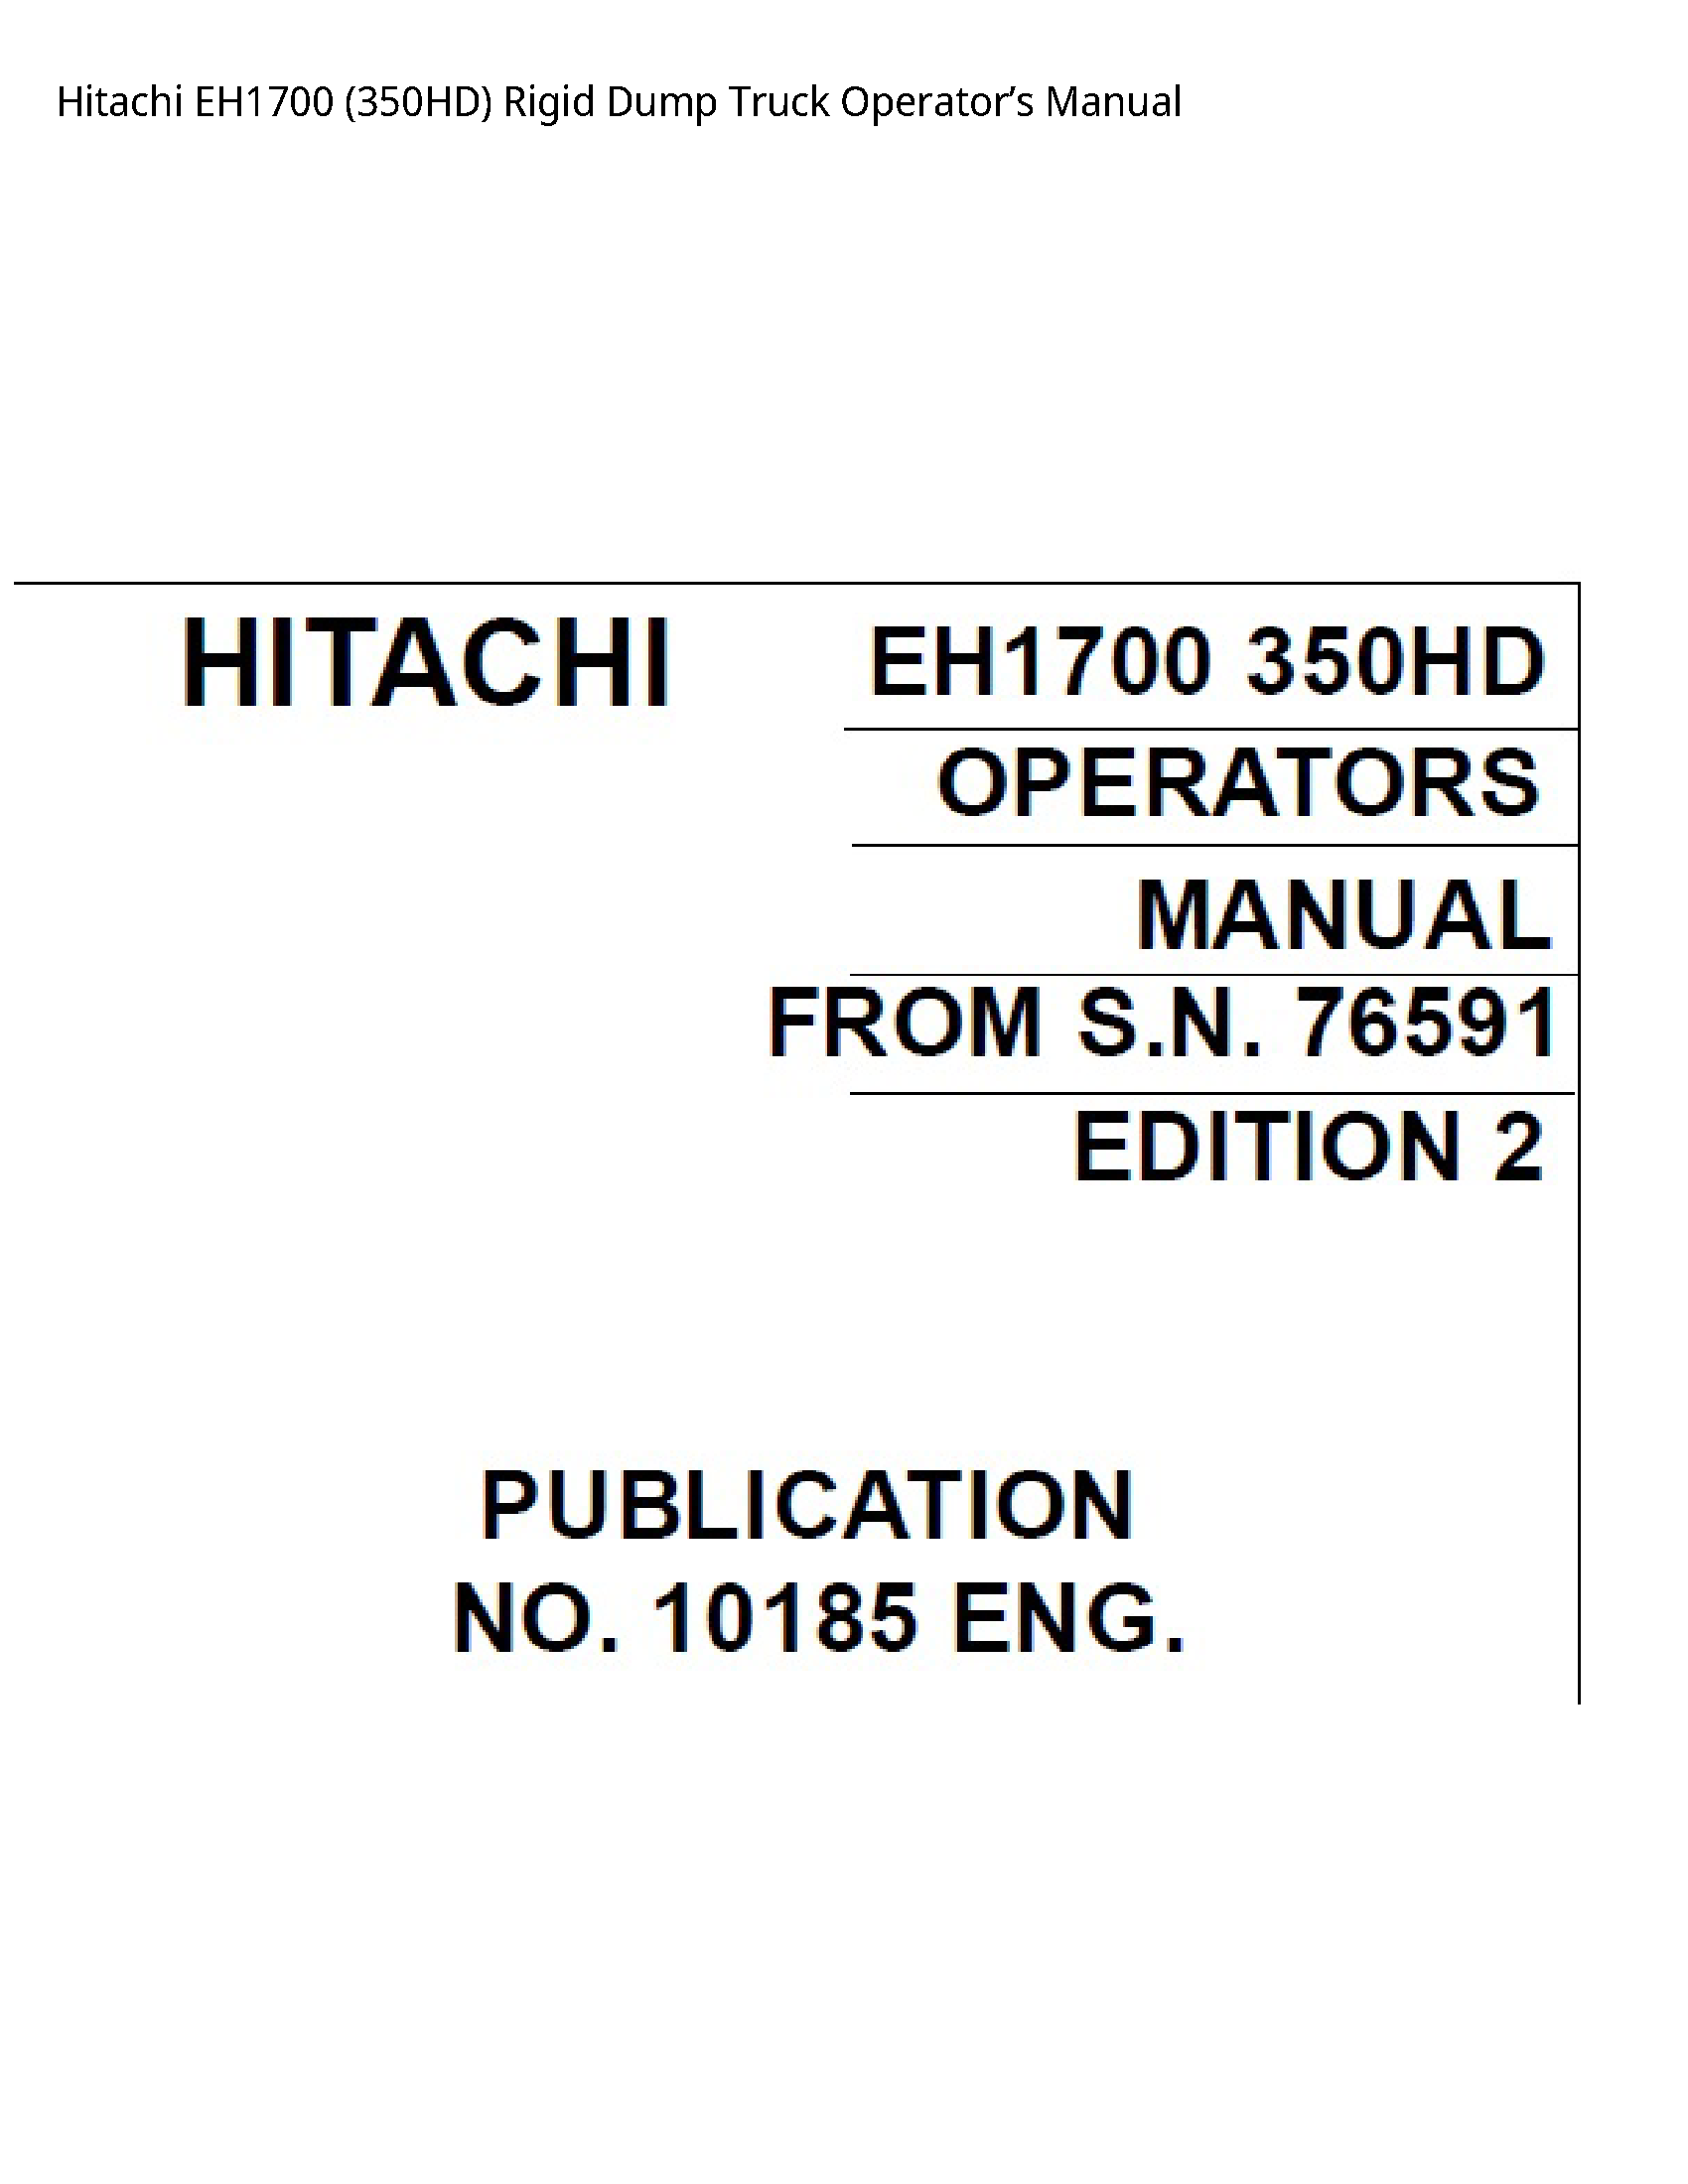 Hitachi EH1700 Rigid Dump Truck Operator’s manual